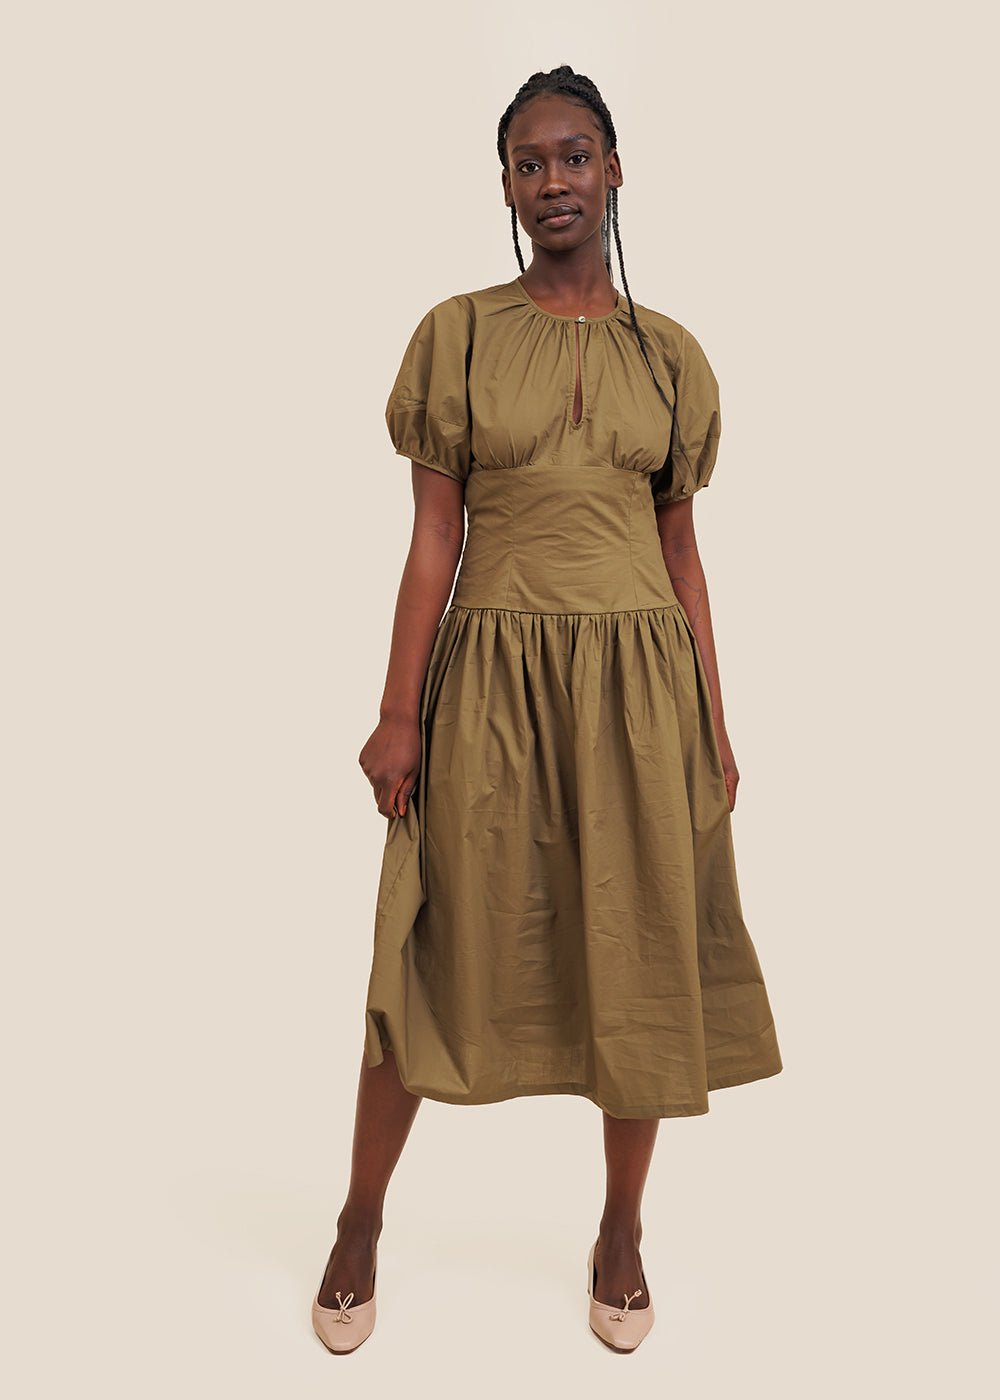 1/6 Scale Female Clothing Set Evolution - Olive Green